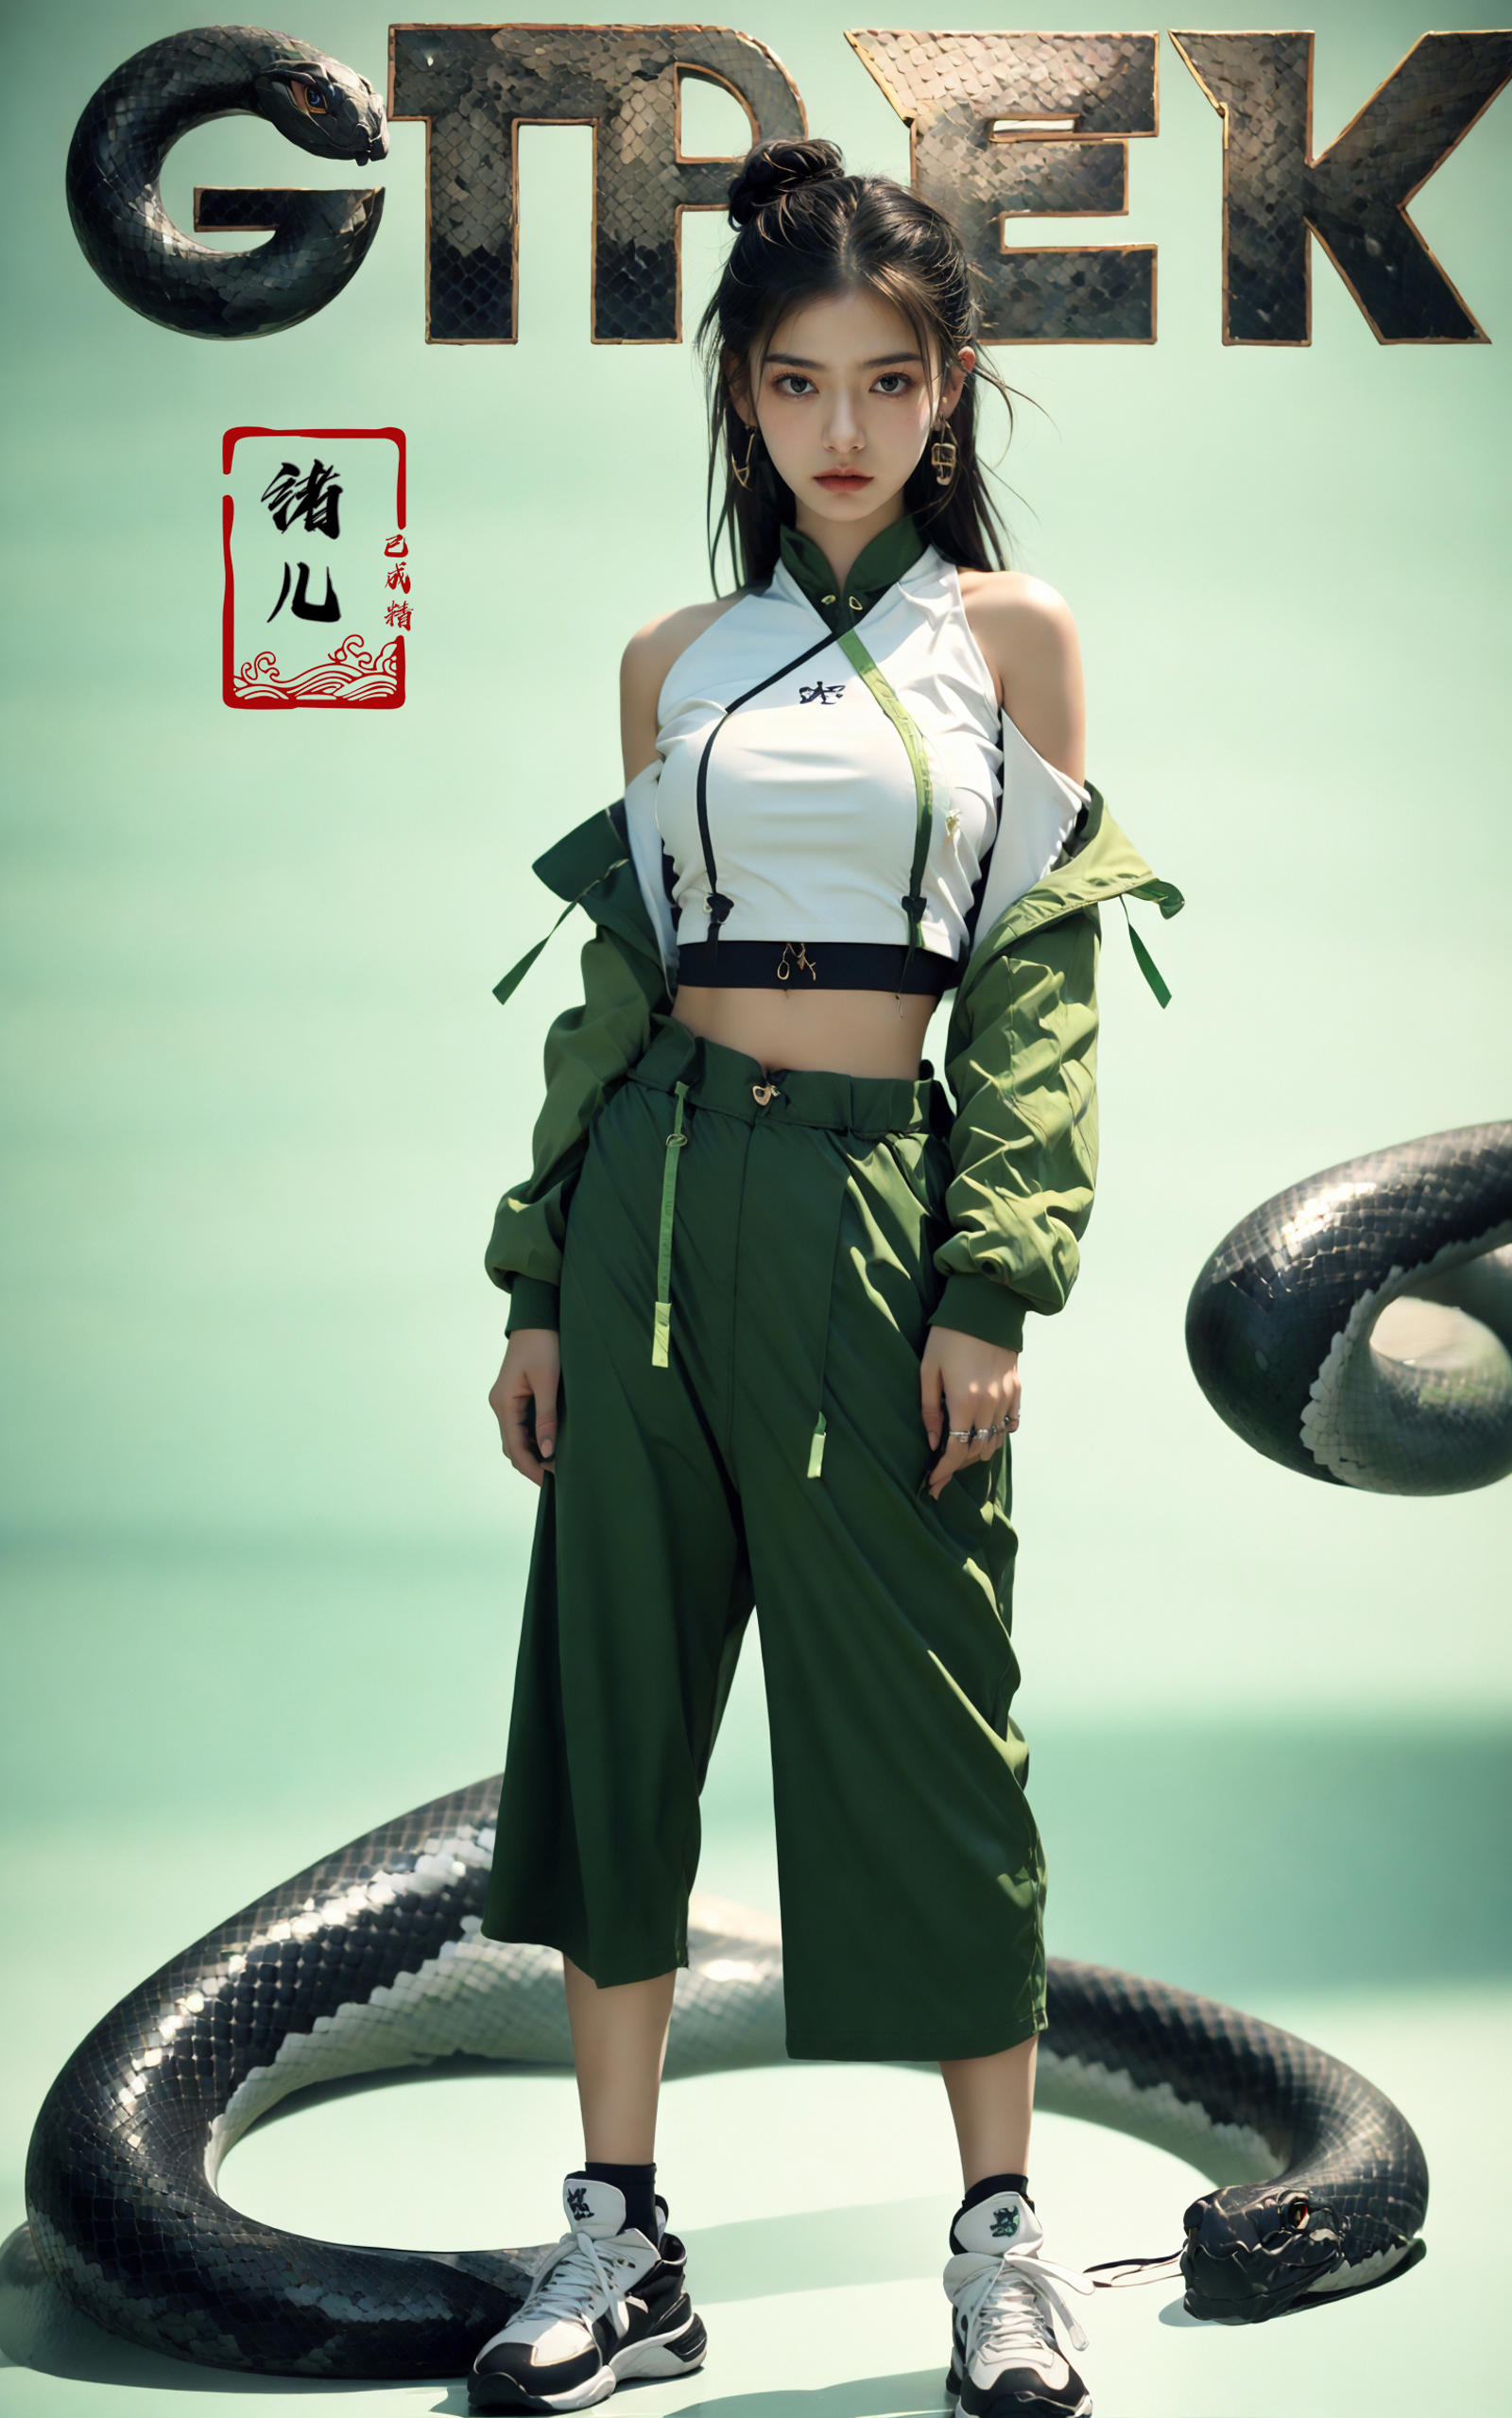 绪儿-龙蛇演义 Dragon and Snake image by XRYCJ